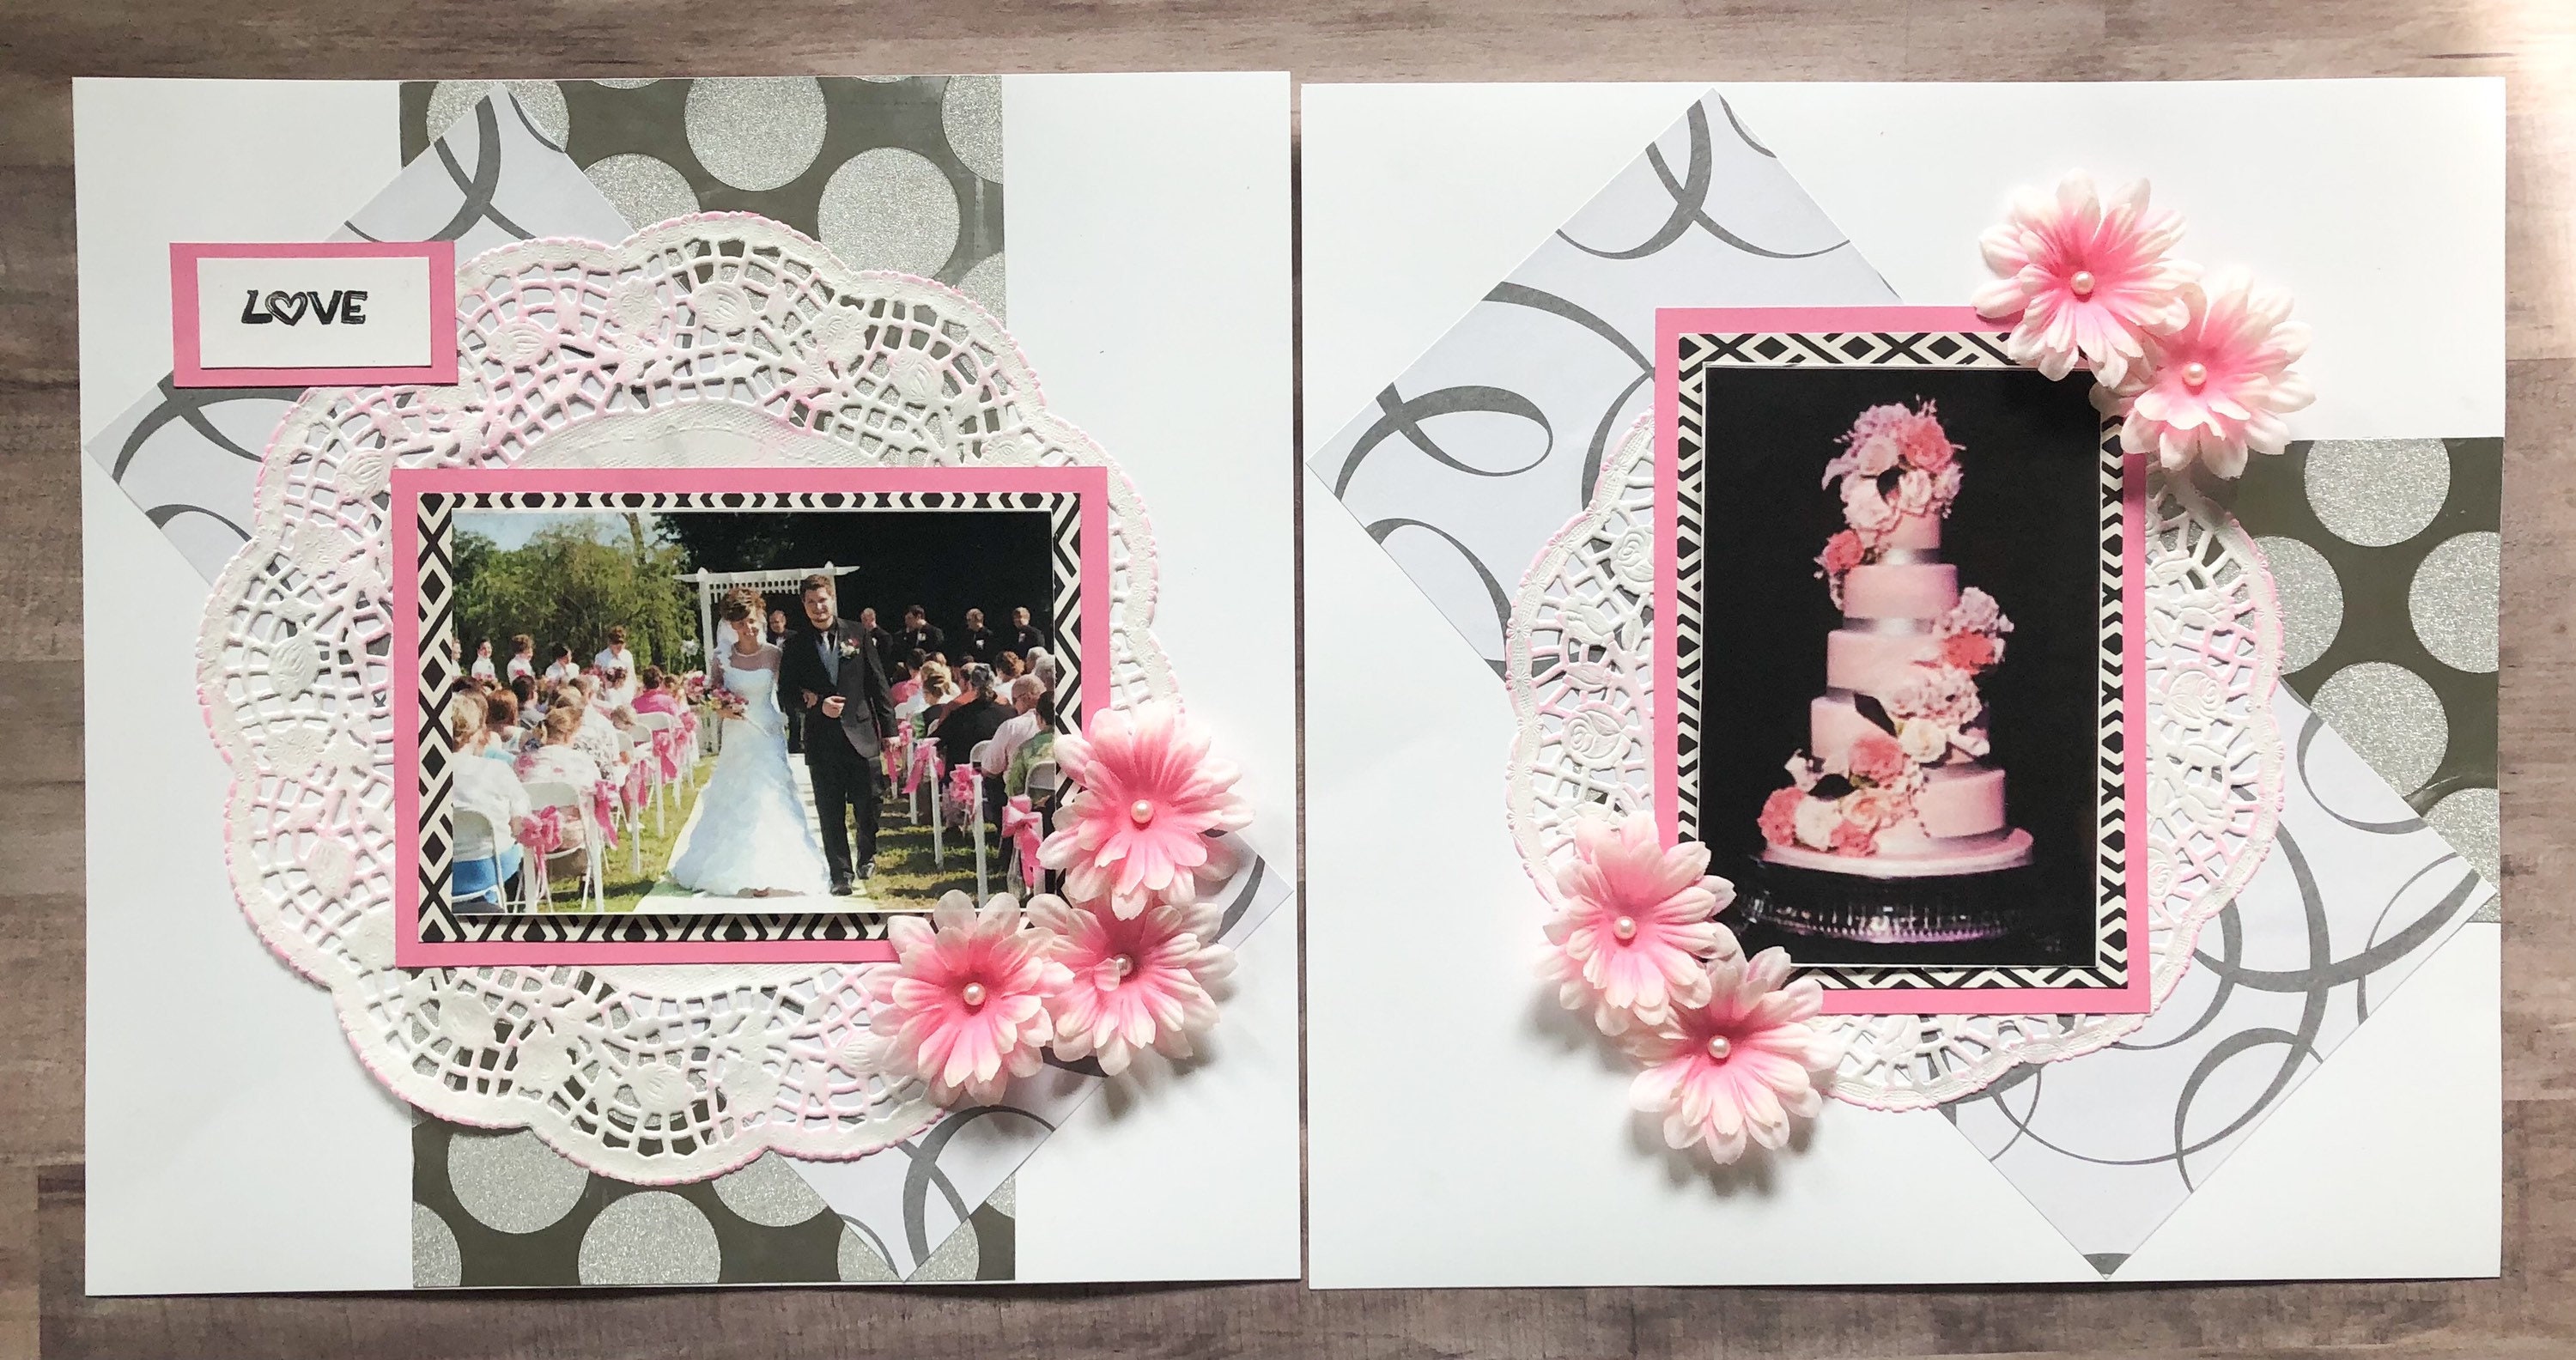 Wedding layout from my wedding scrapbook!  Wedding scrapbook pages,  Wedding scrapbooking layouts, Bride scrapbook